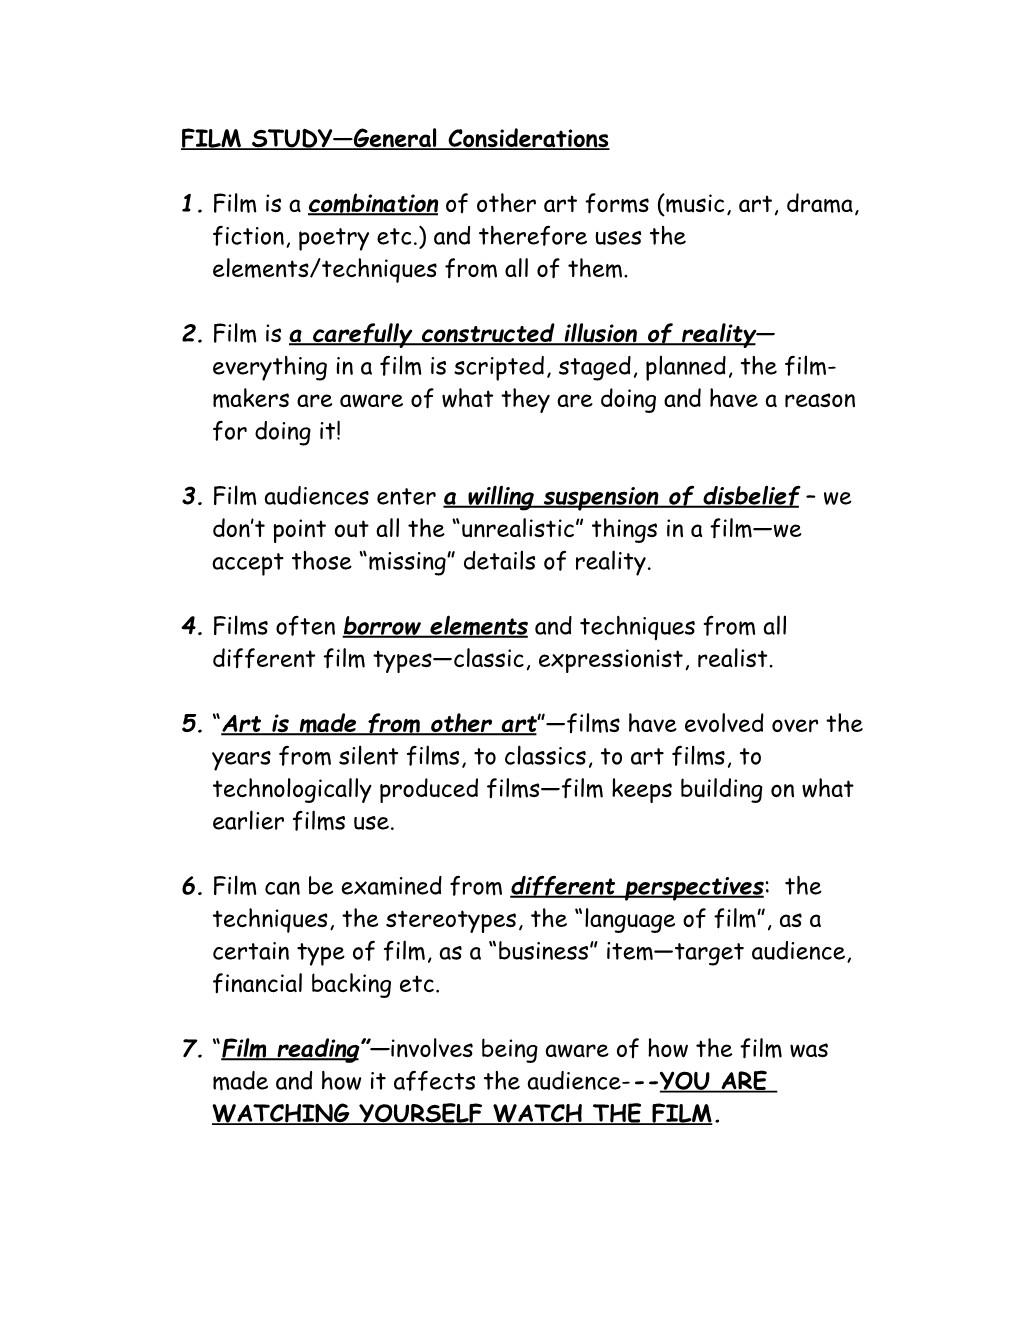 ELA 20-2 FILM STUDY General Considerations